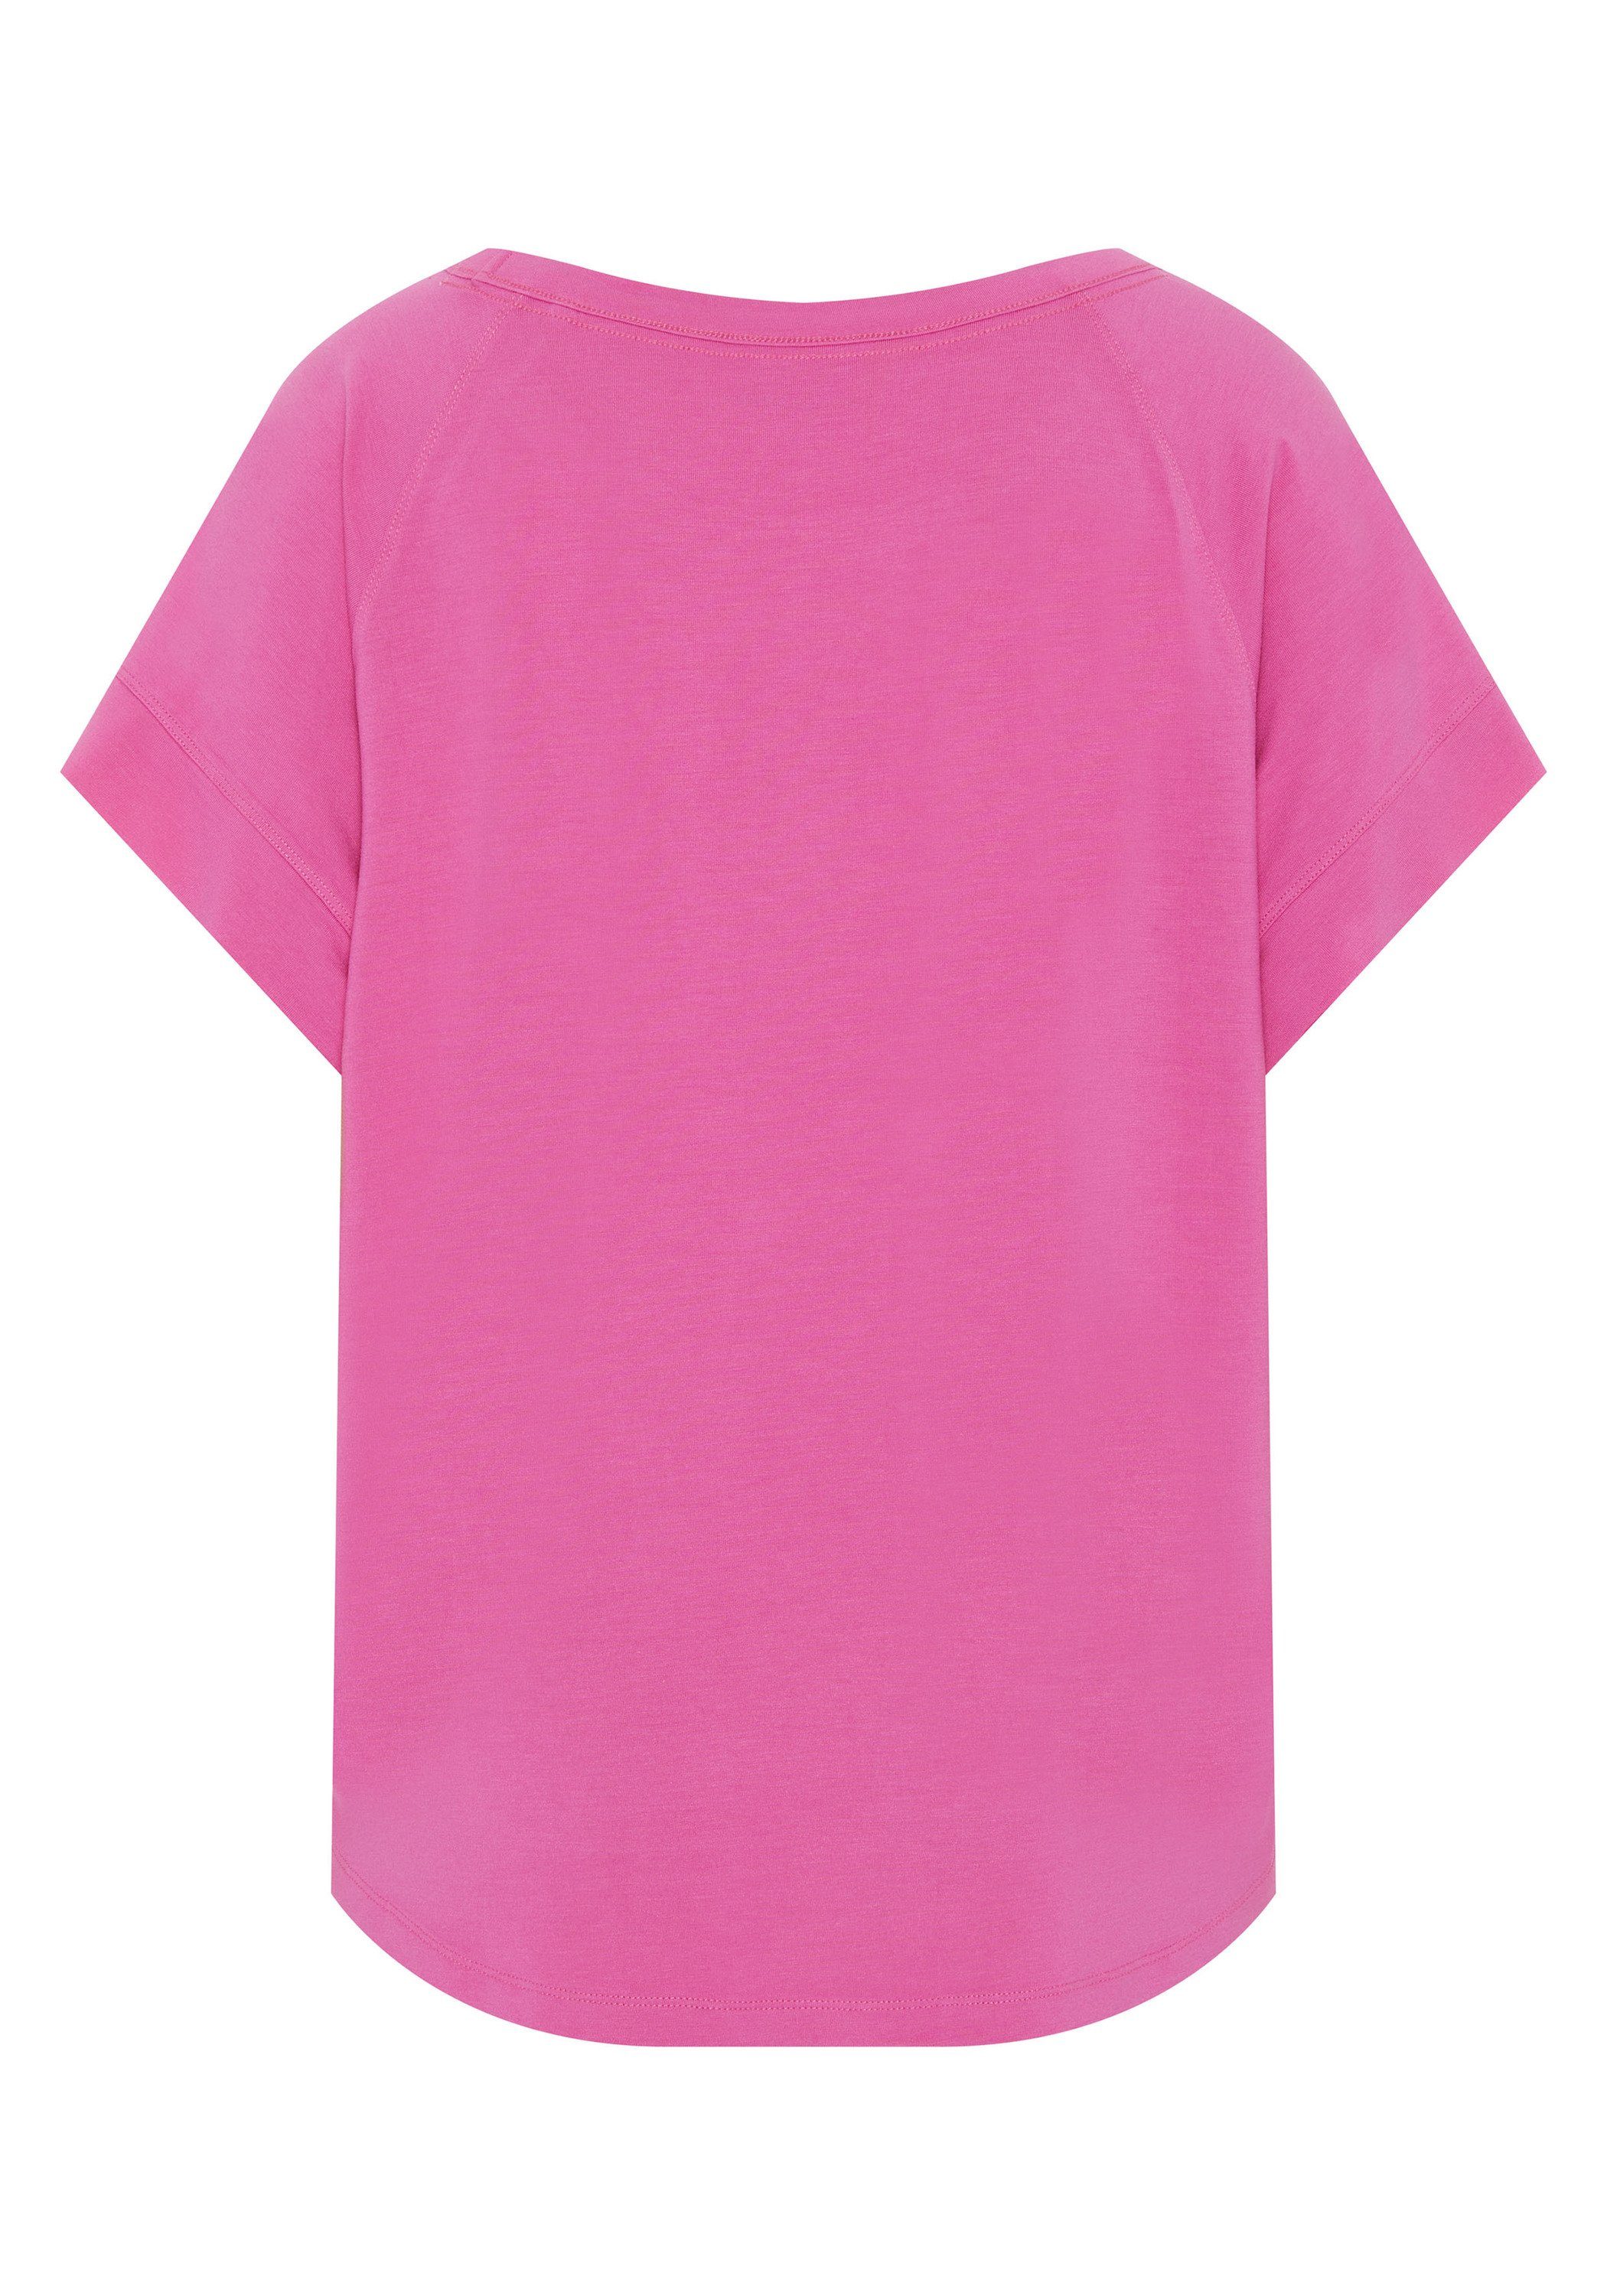 Print-Shirt Shape 17-2521 und JETTE boxy Cone Flower Comfort-Fit SPORT